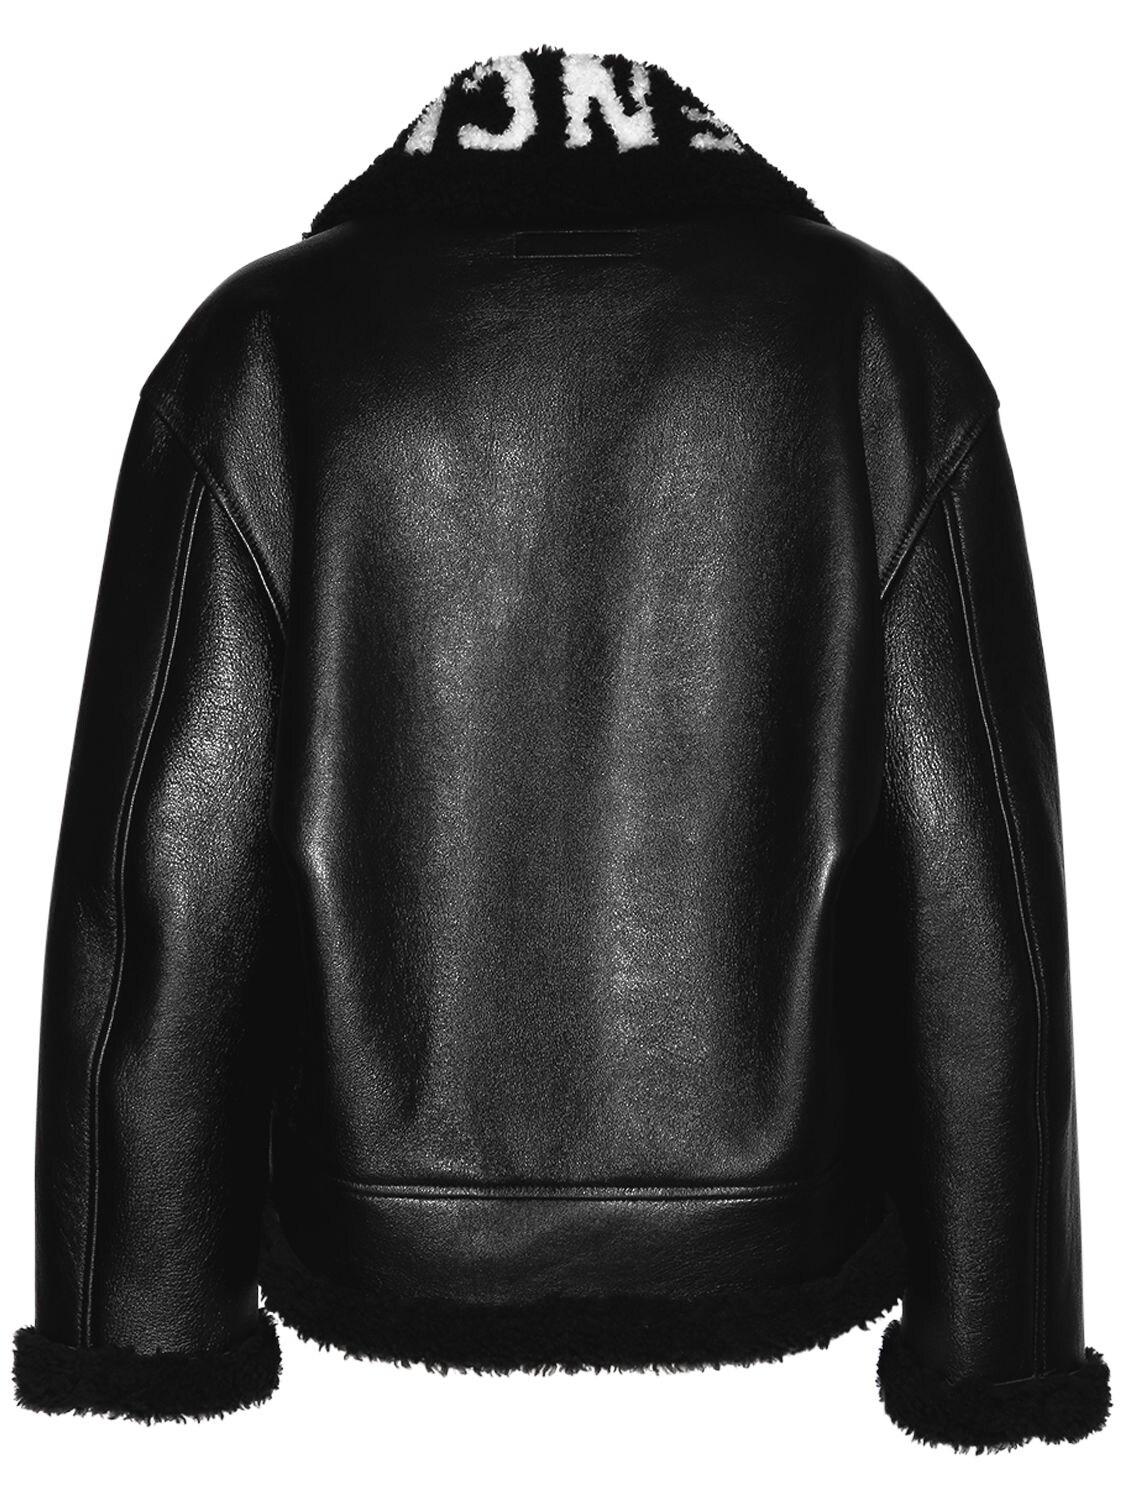 Balenciaga Cocoon Shearling Jacket in Black | Lyst